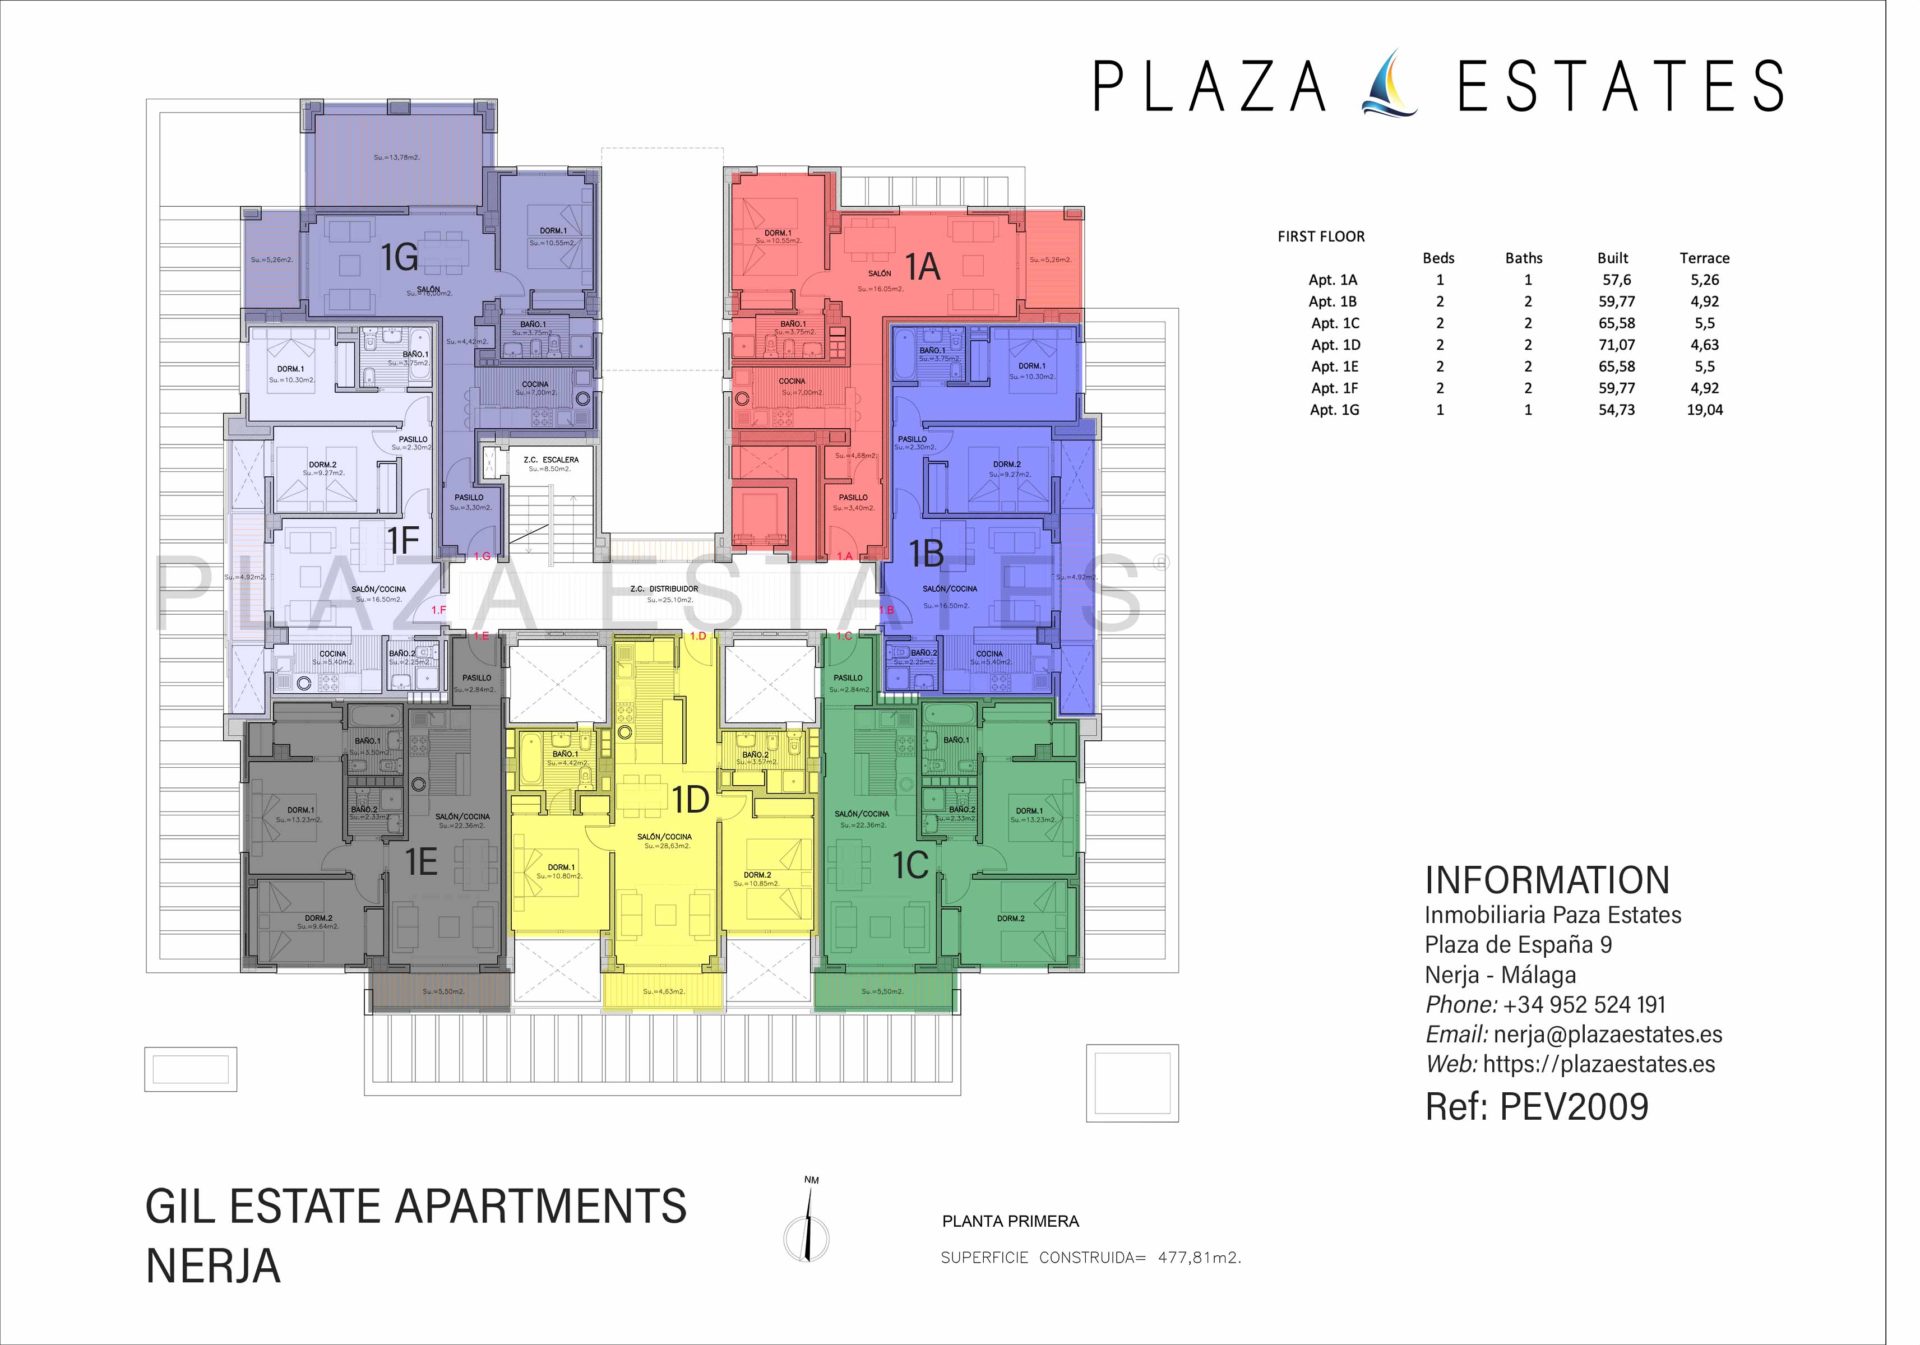 Gil Estate Apartments for sale in Nerjap lanta-1